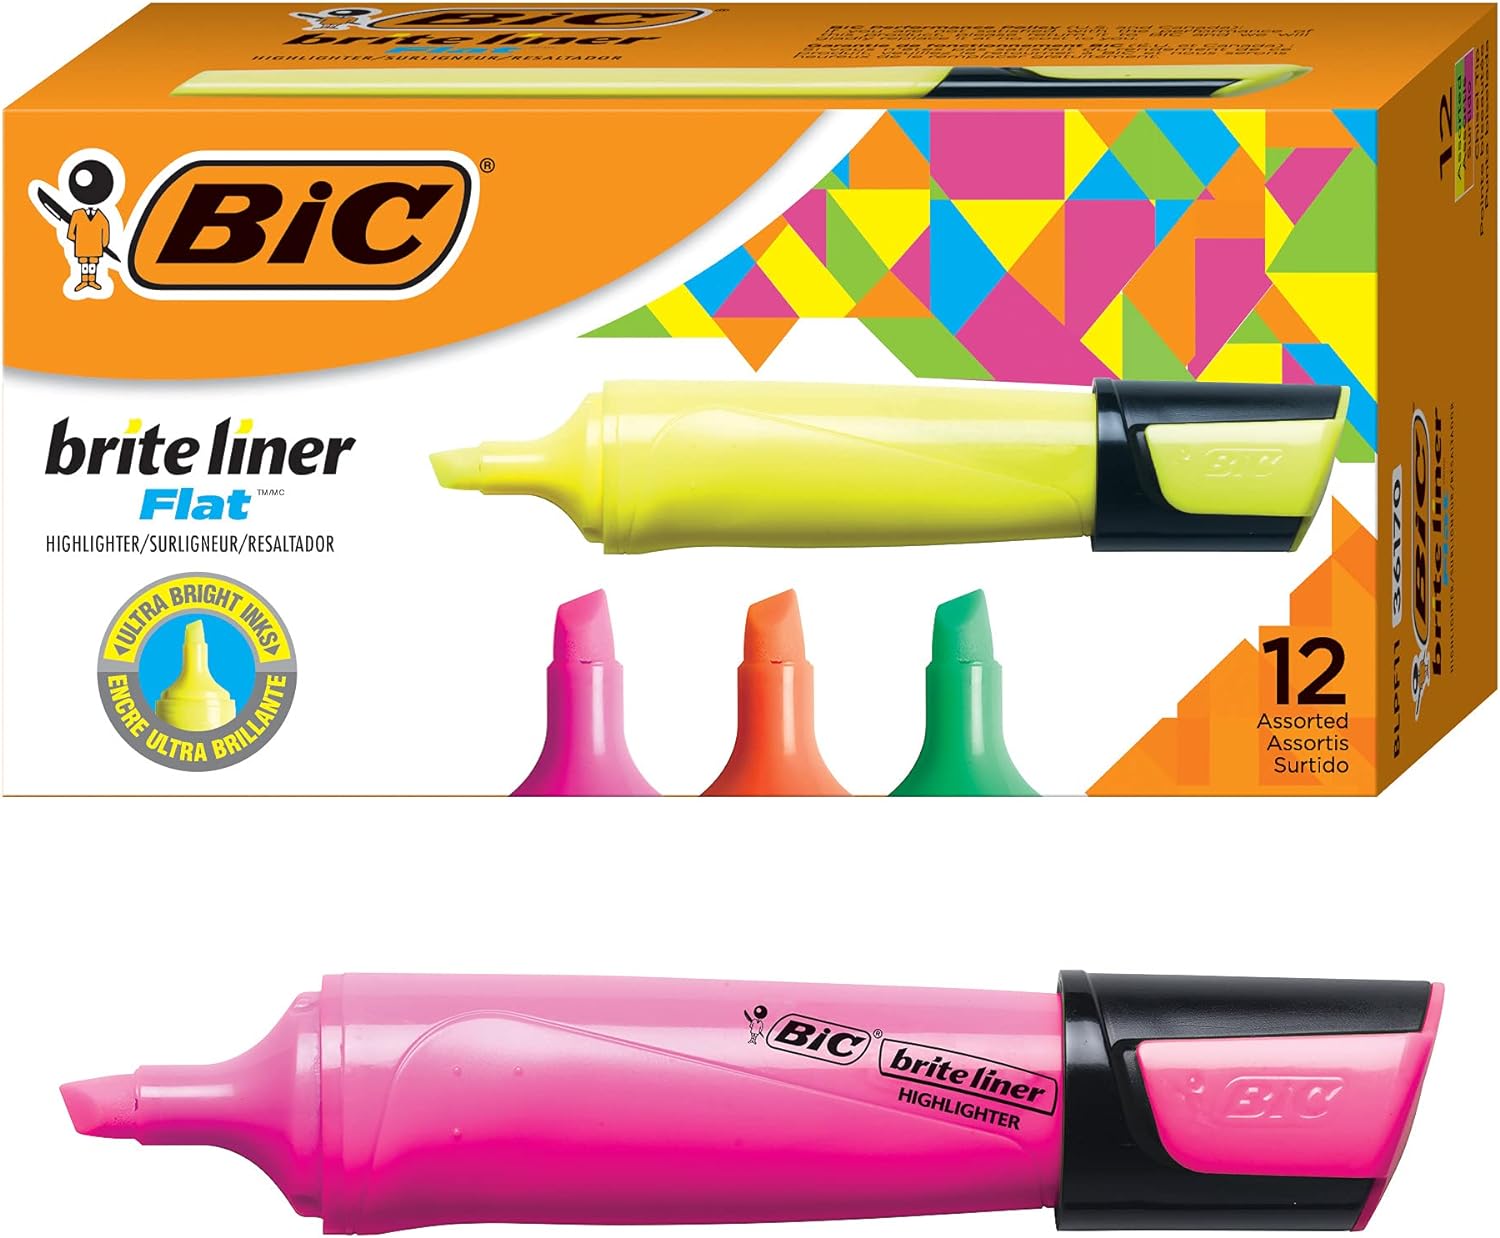 BIC Brite Liner Flat Highlighter, Chisel Tip For Broad Highlighting & Fine Underlining, Assorted Colors, 12-Count